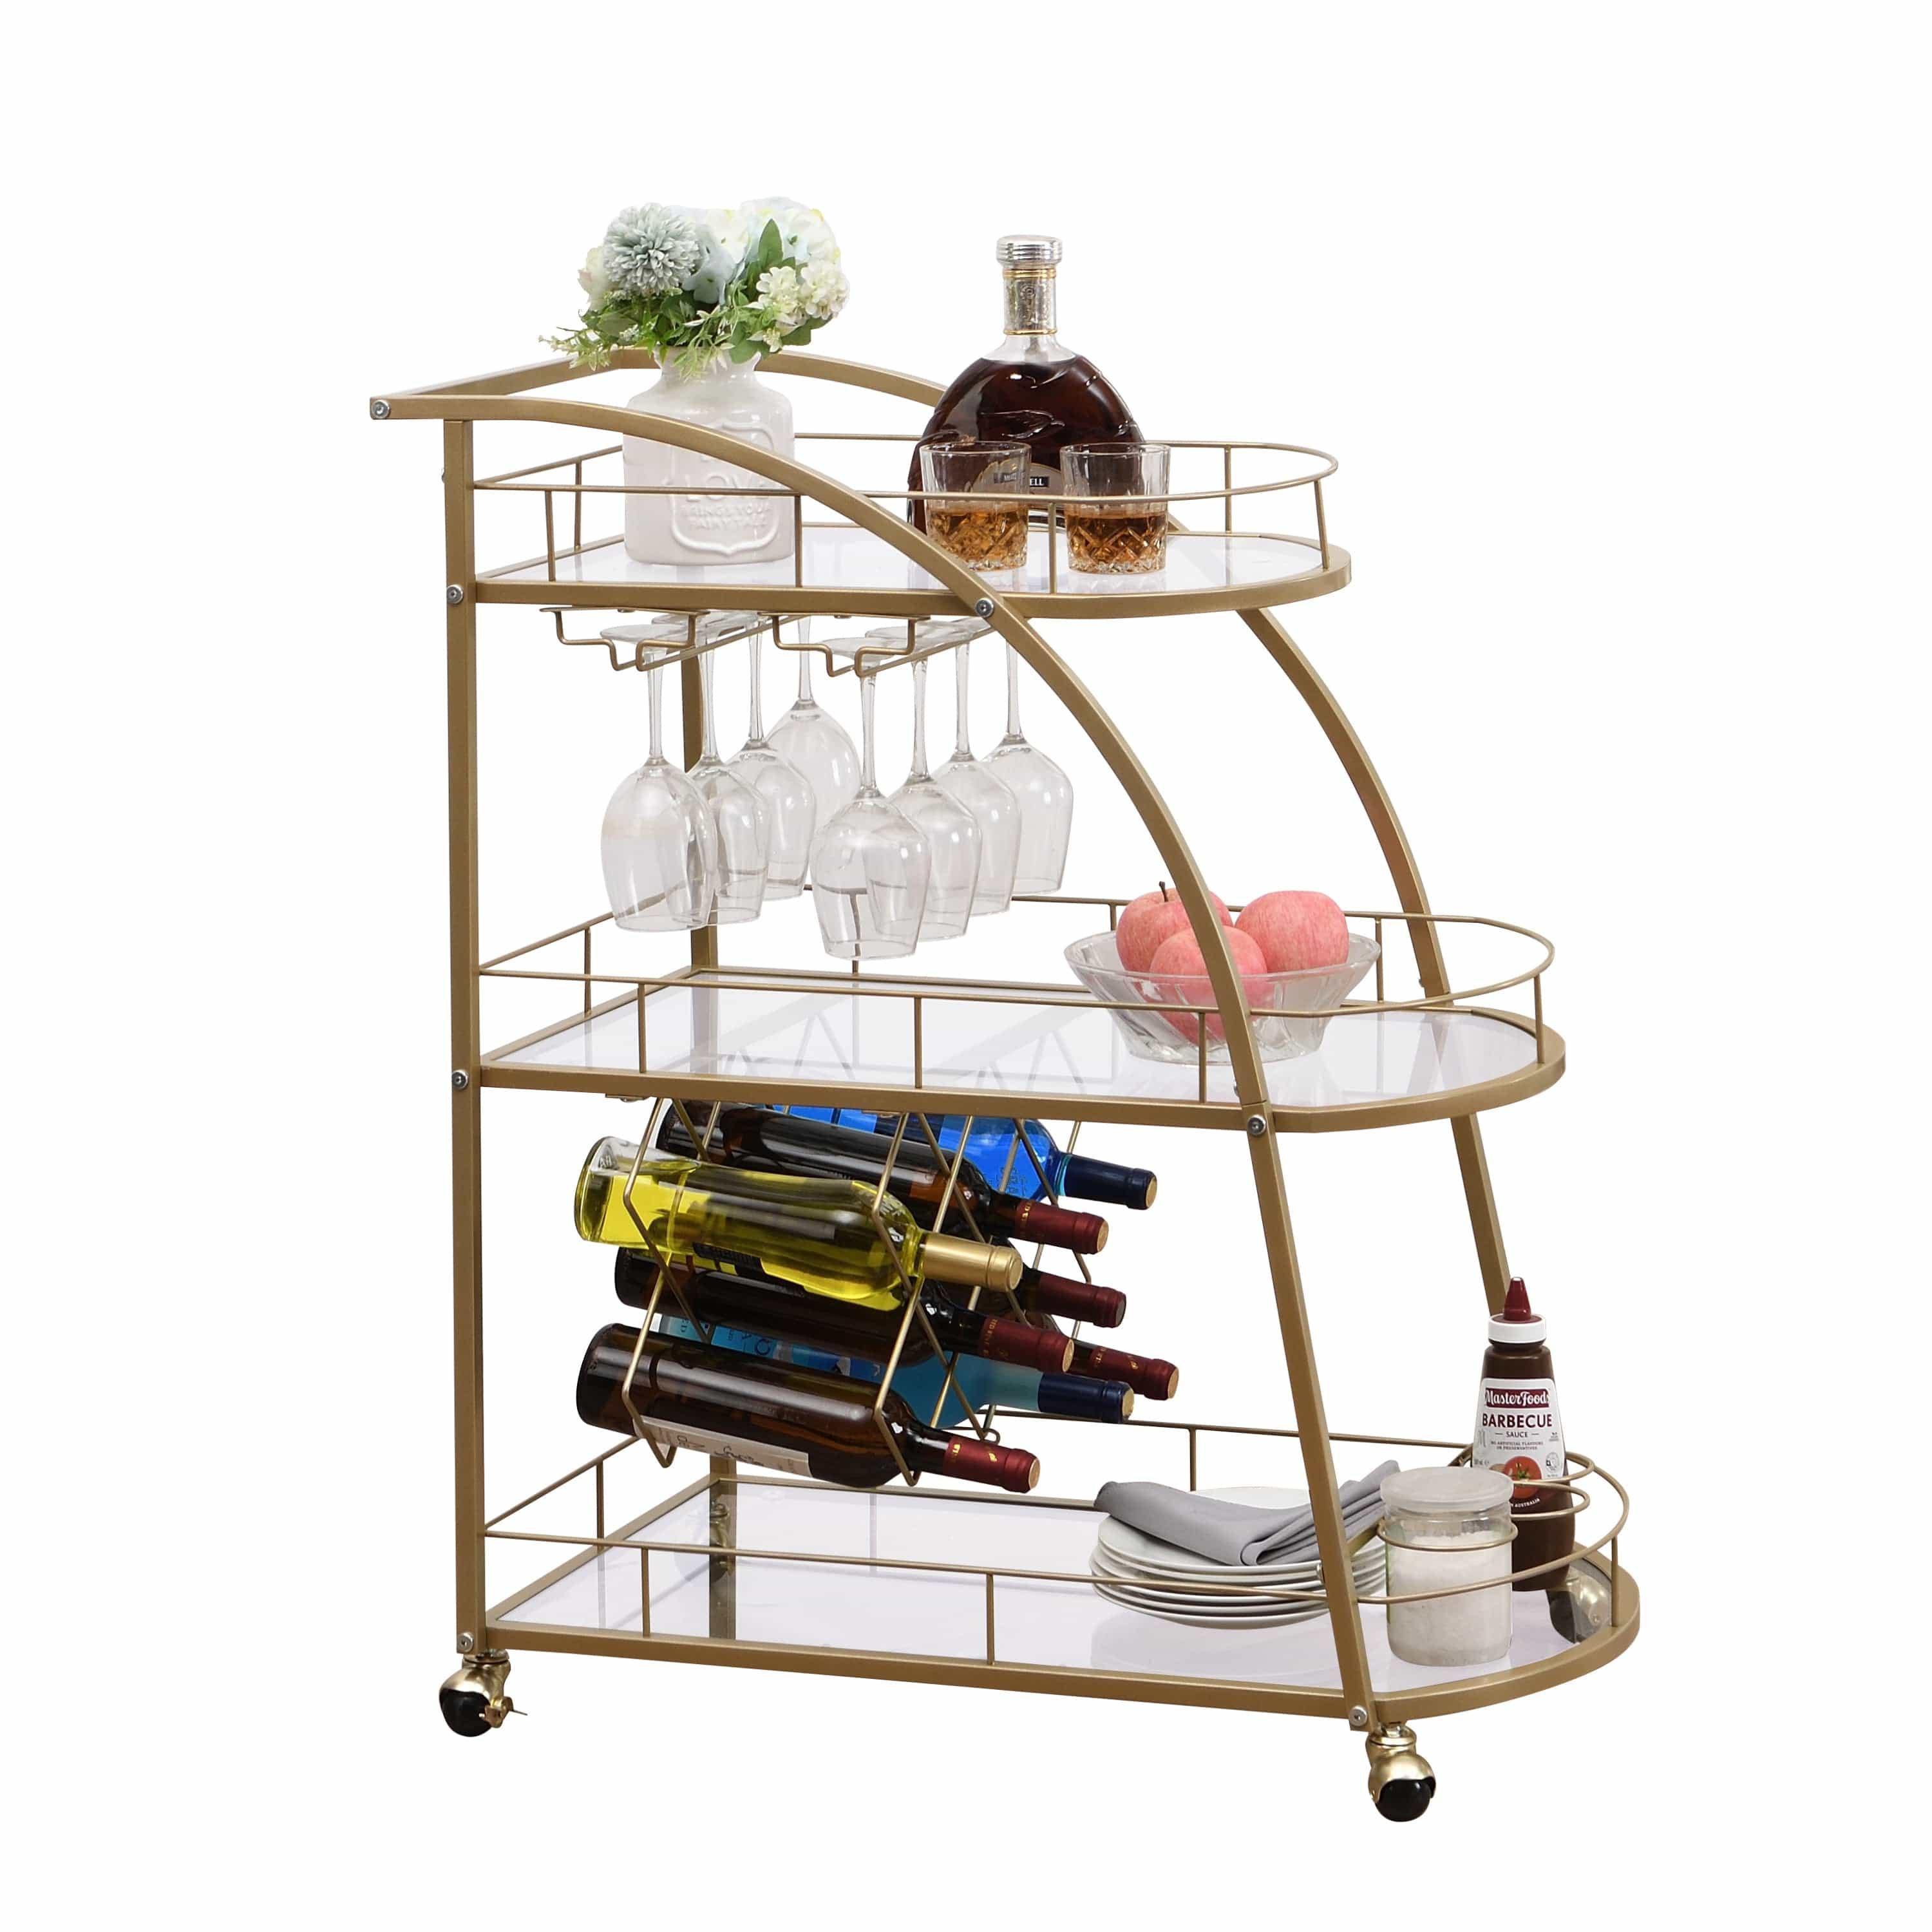 Shop Golden Mobile Bar Cart Serving Wine Cart with Wheels, 3-tier Metal Frame Elegant Wine Rack for Kitchen, Party, Dining Room and Living Room Mademoiselle Home Decor